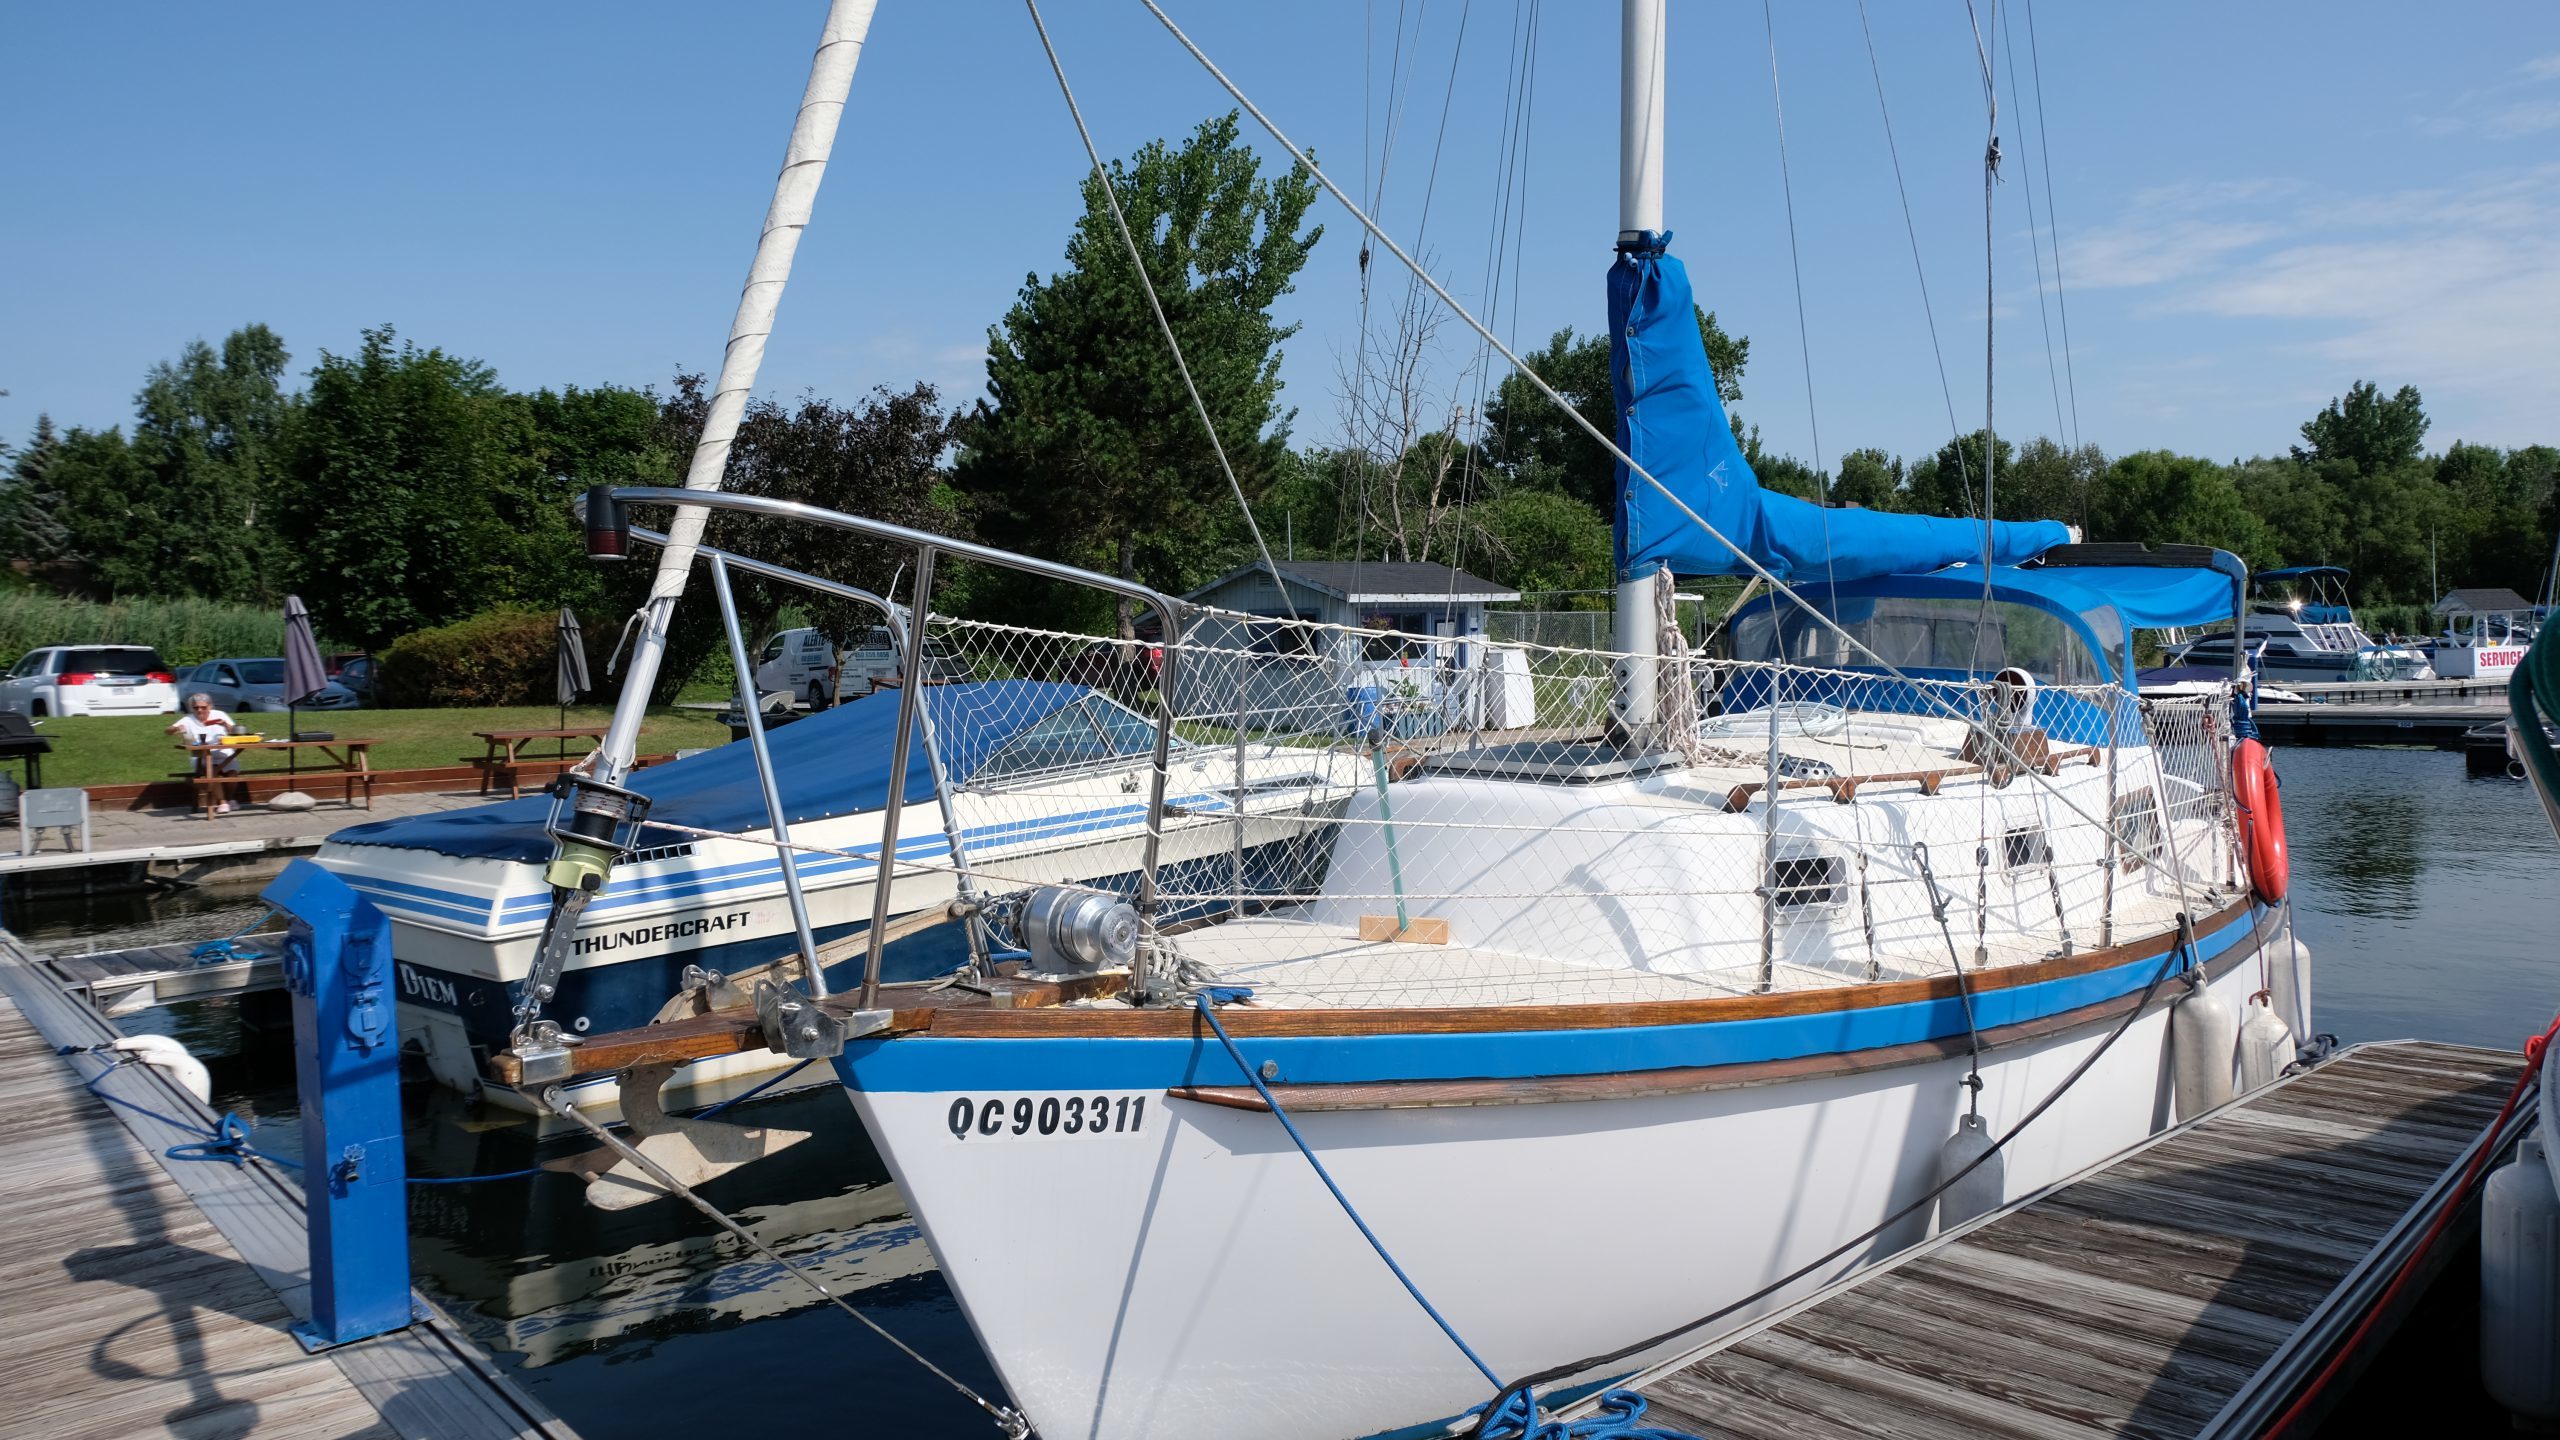 sailboats for sale vancouver craigslist